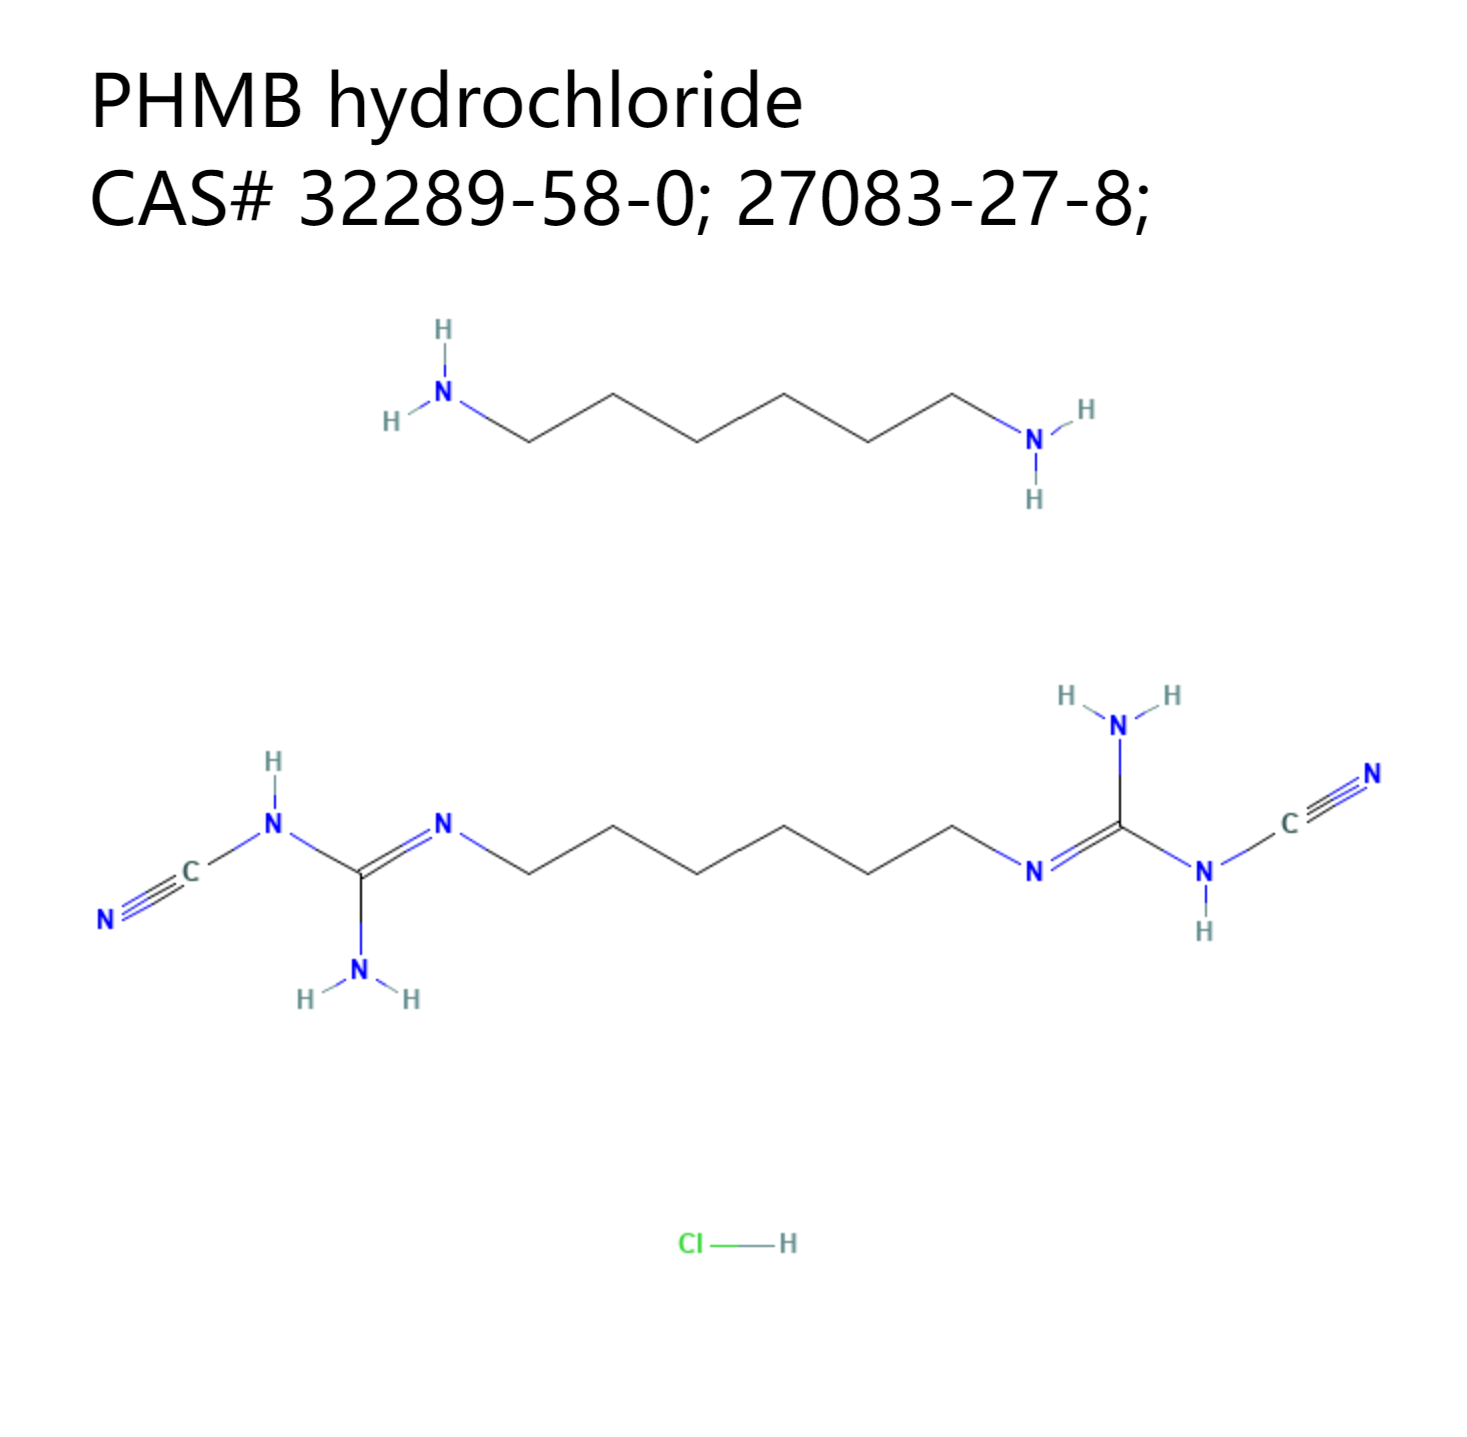 PHMB hydrochloride